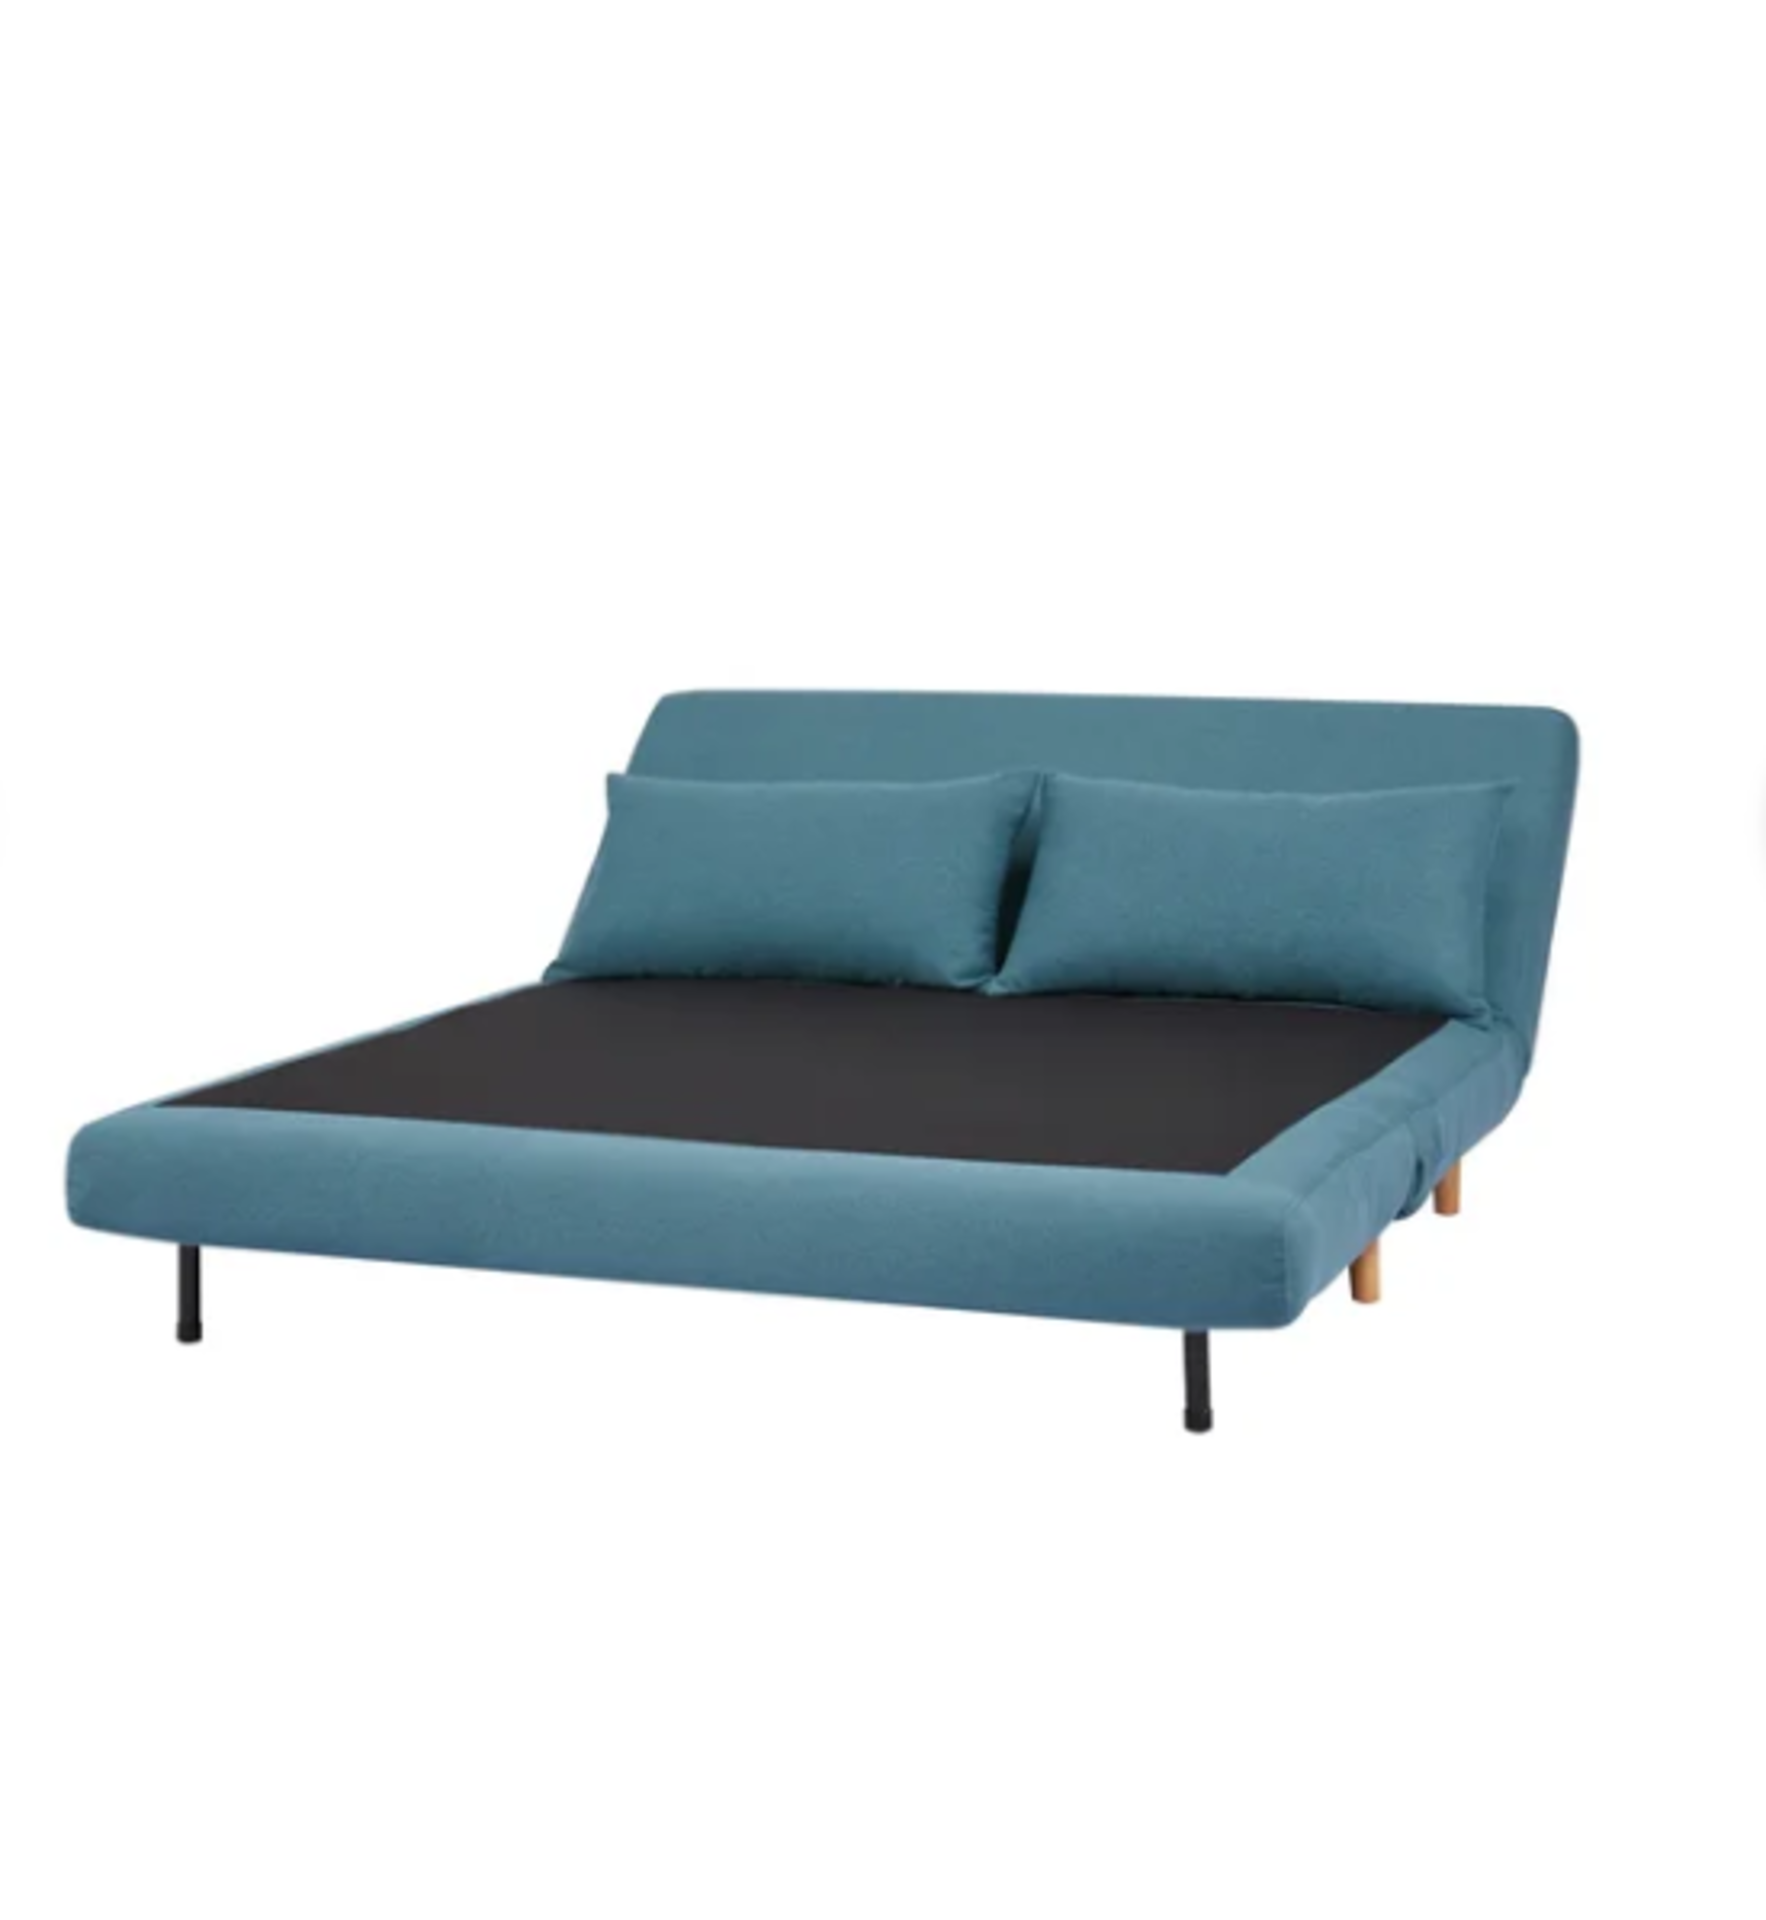 Zipcode Design Etelvina 2 Seater Upholstered Sofa Bed. RRP £539.99. SR3 - Image 2 of 2